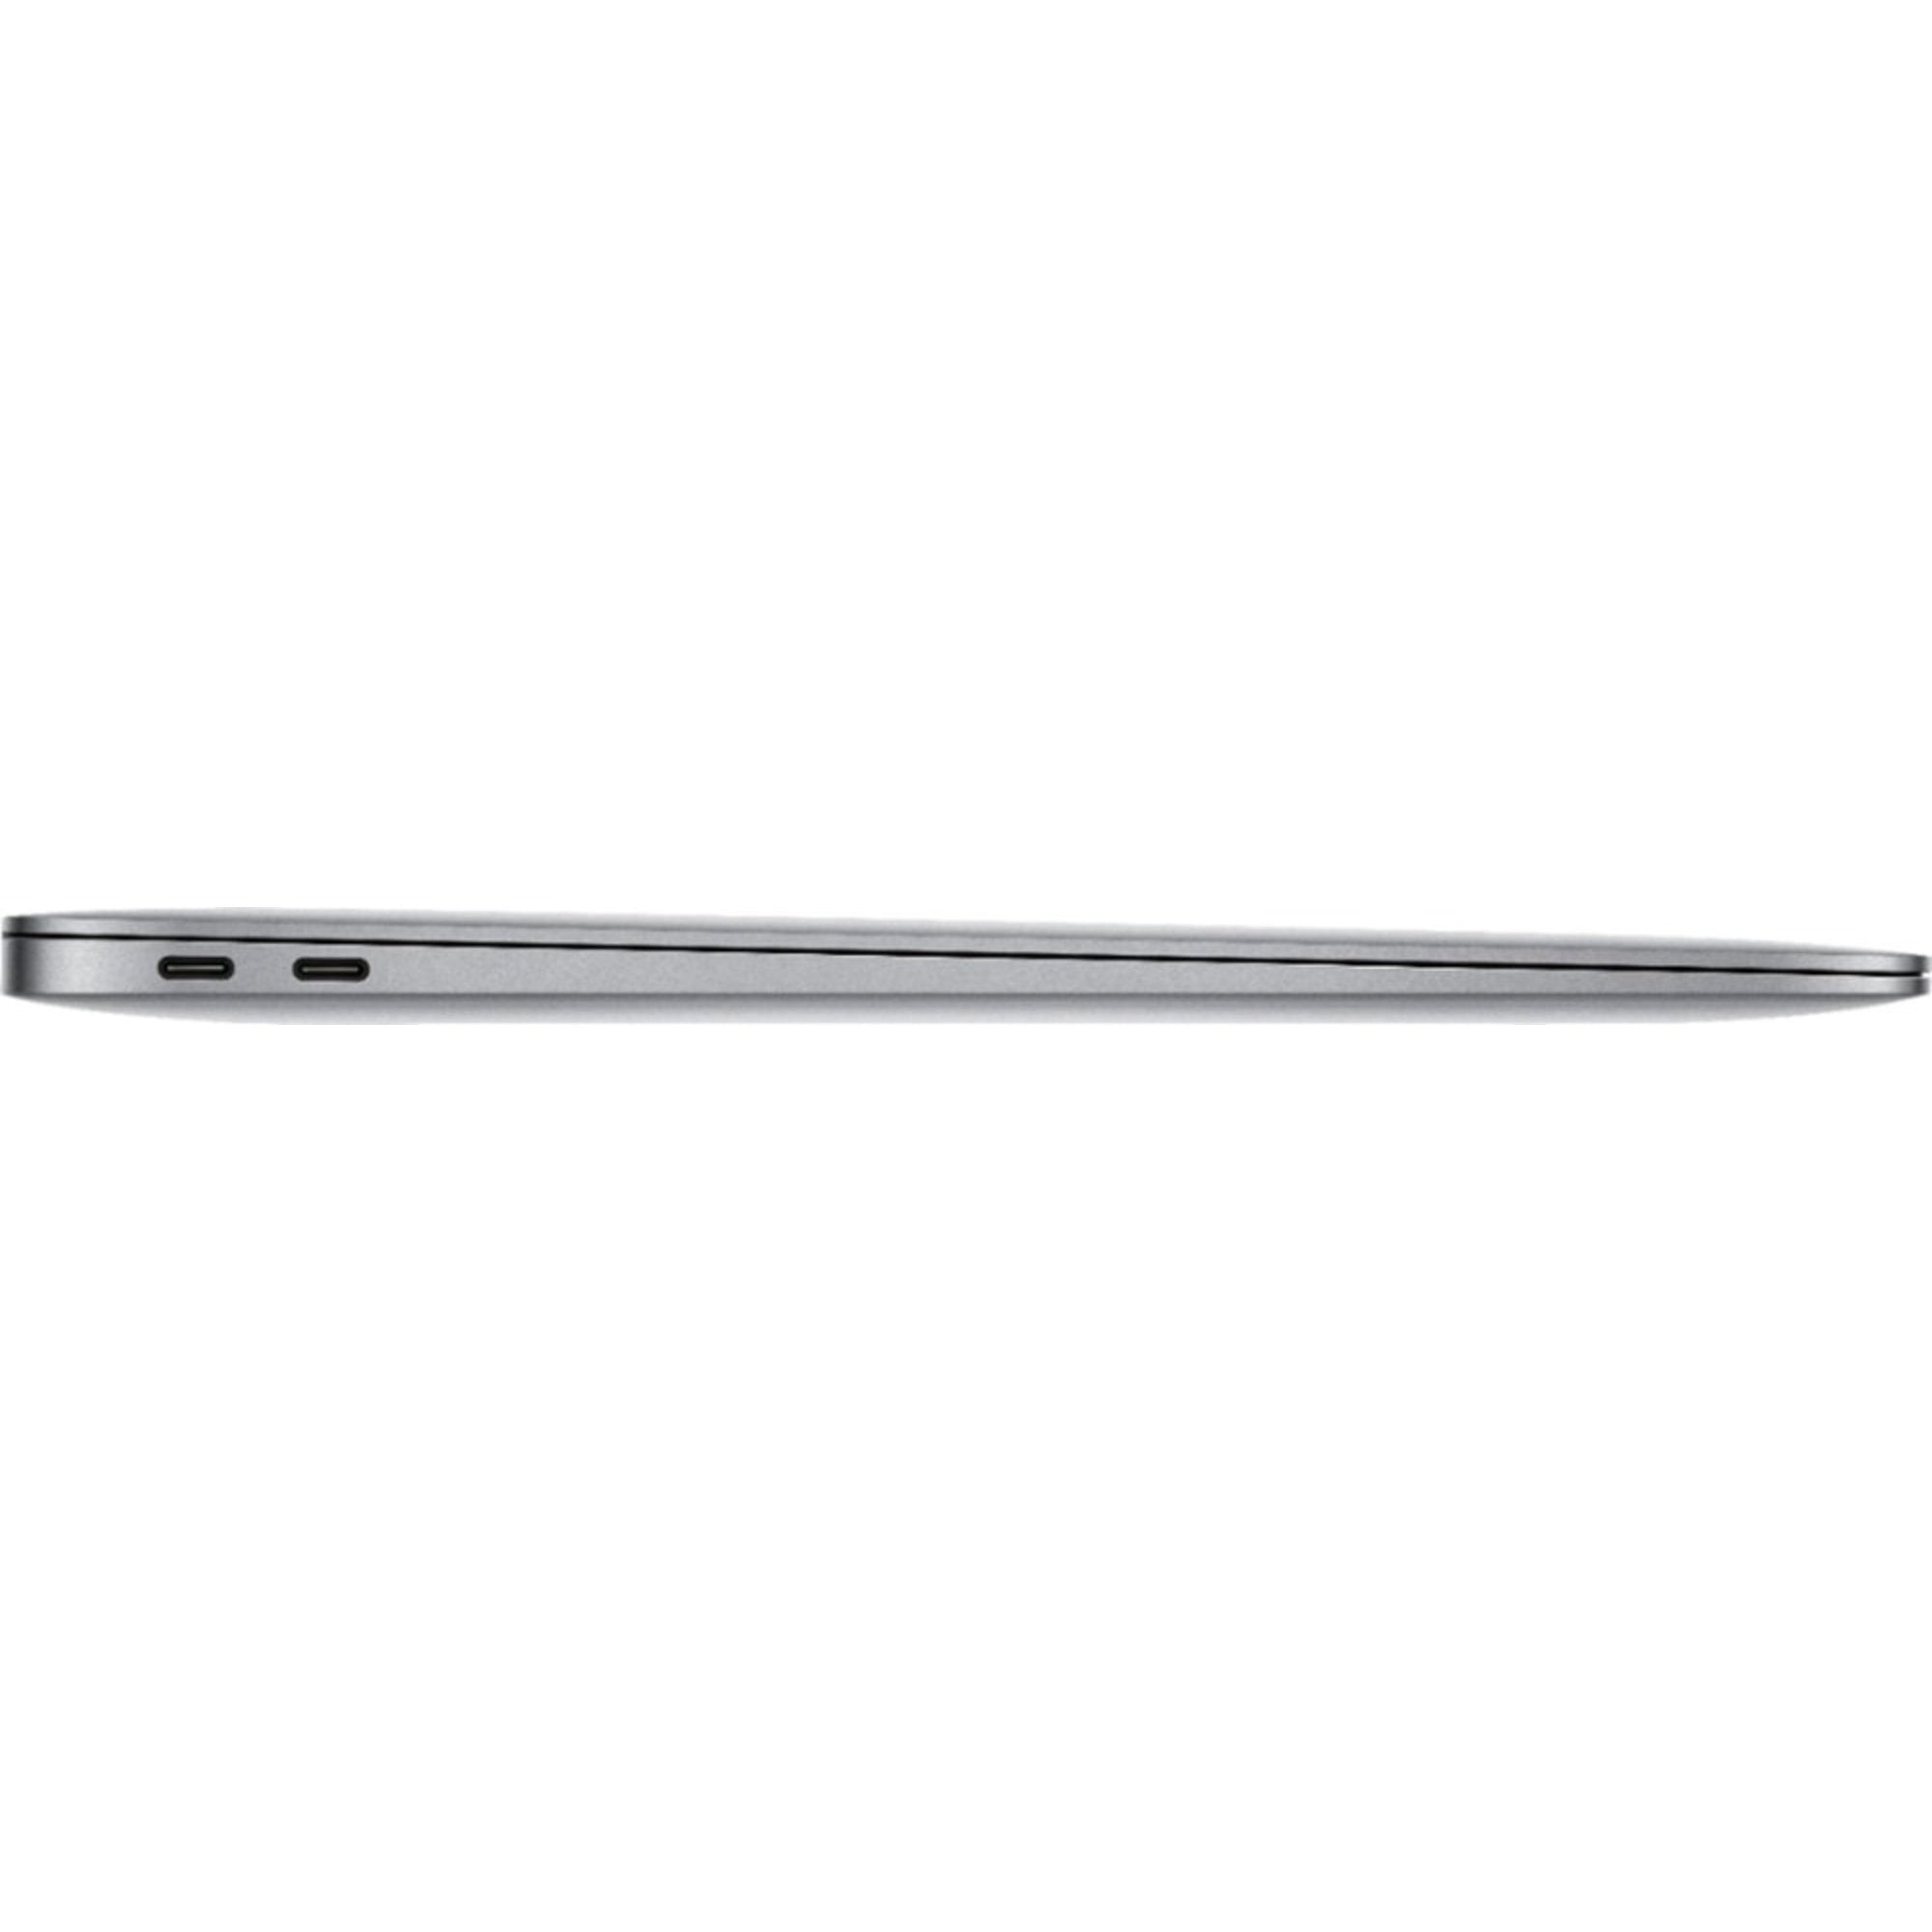 Restored Apple MacBook Air 13.3 2018 128GB MRE82LL/A - Space Gray 